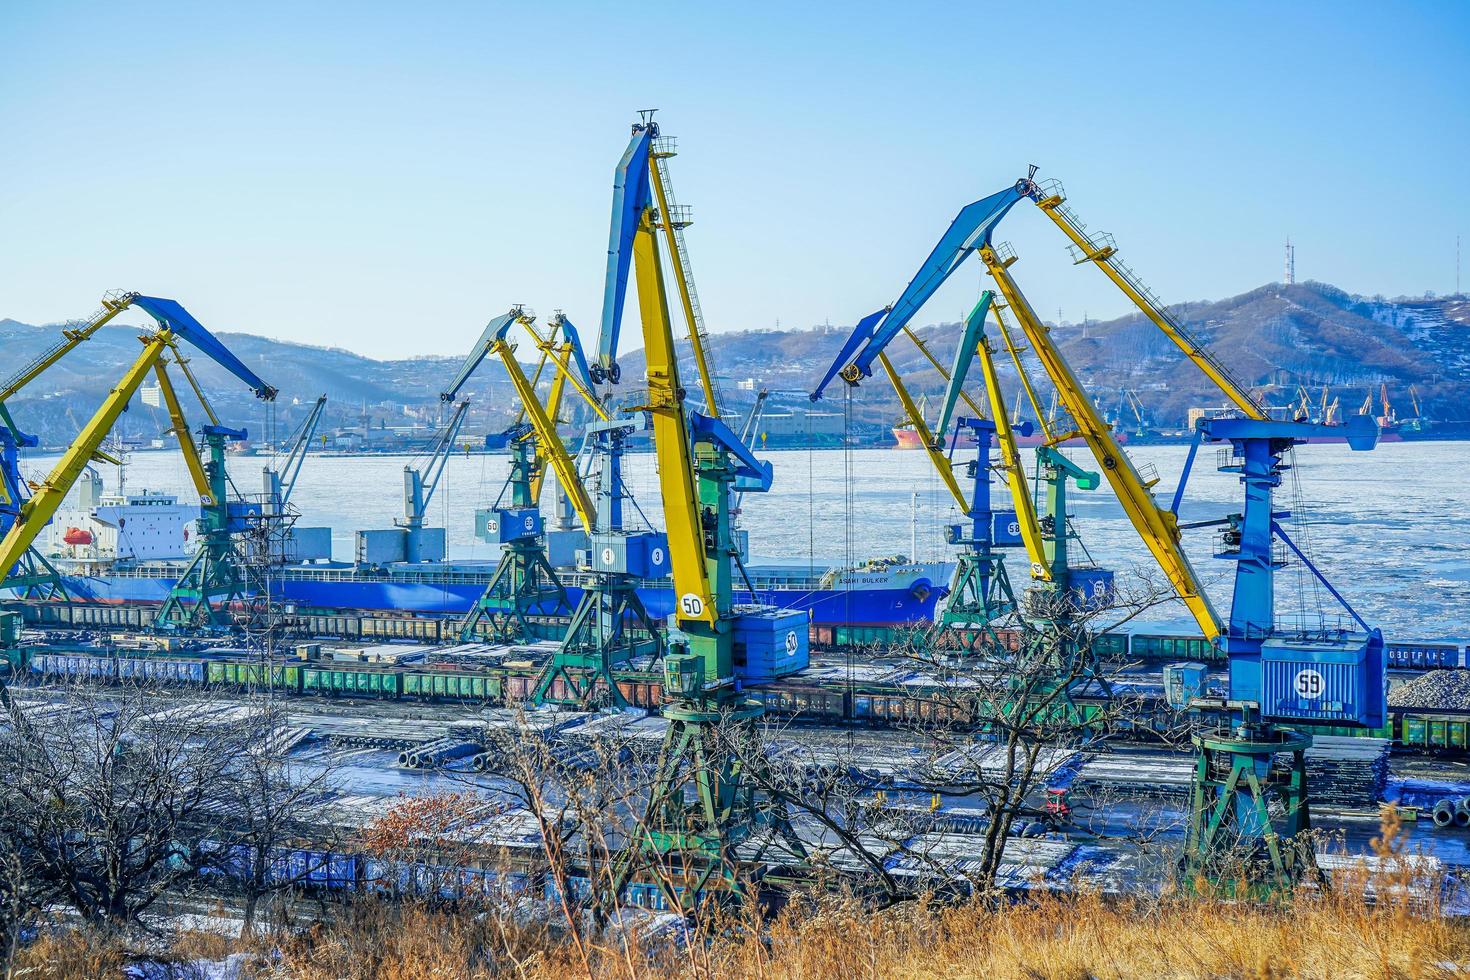 nakhodka, primorsky krai-10 gennaio 2020- paesaggio urbano con vista sul porto e sulle gru. foto